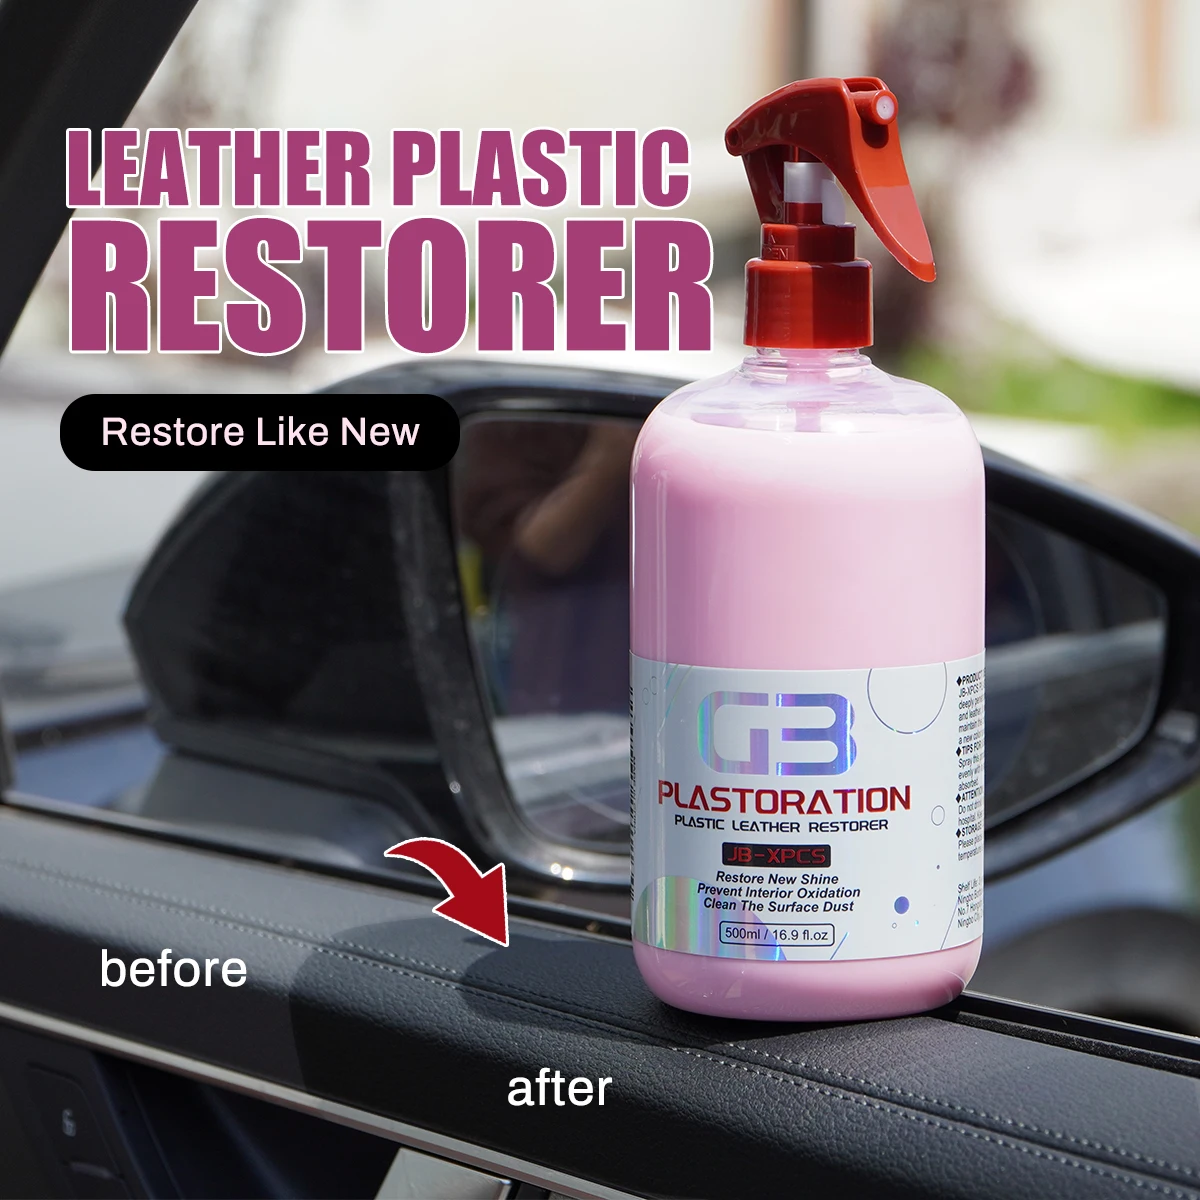 

Car Plastic Leather Restorer Spray Polish Cleaner Coating Agent Quick Coat Interior Detailer for Auto Protect G3 PLASTORATION